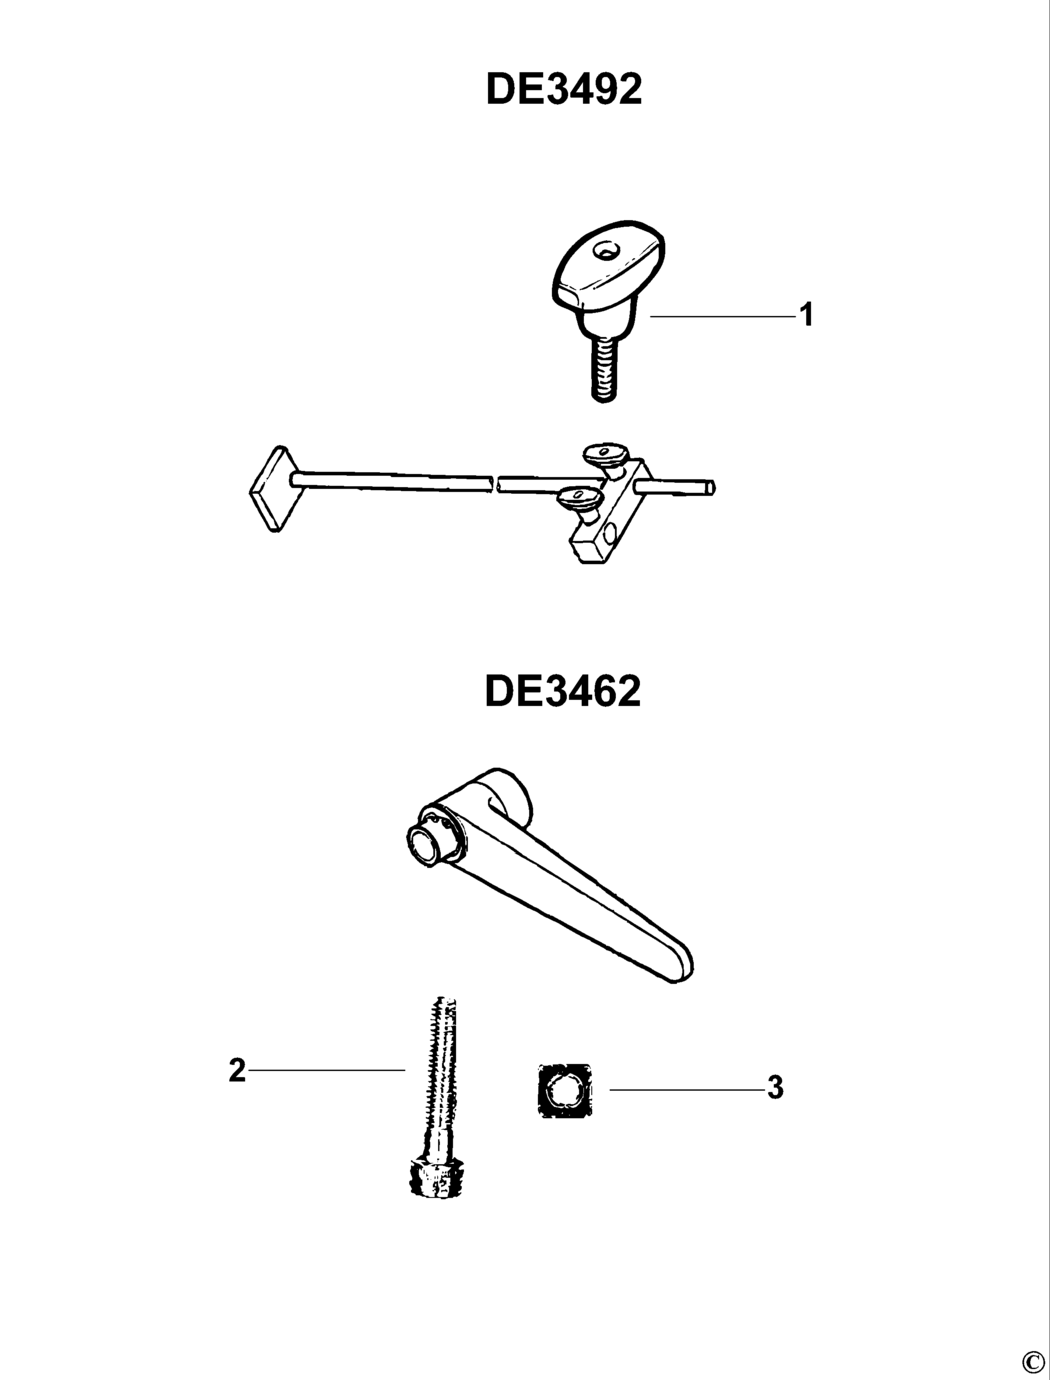 Dewalt DE3492 Type 1 Accessory Spare Parts